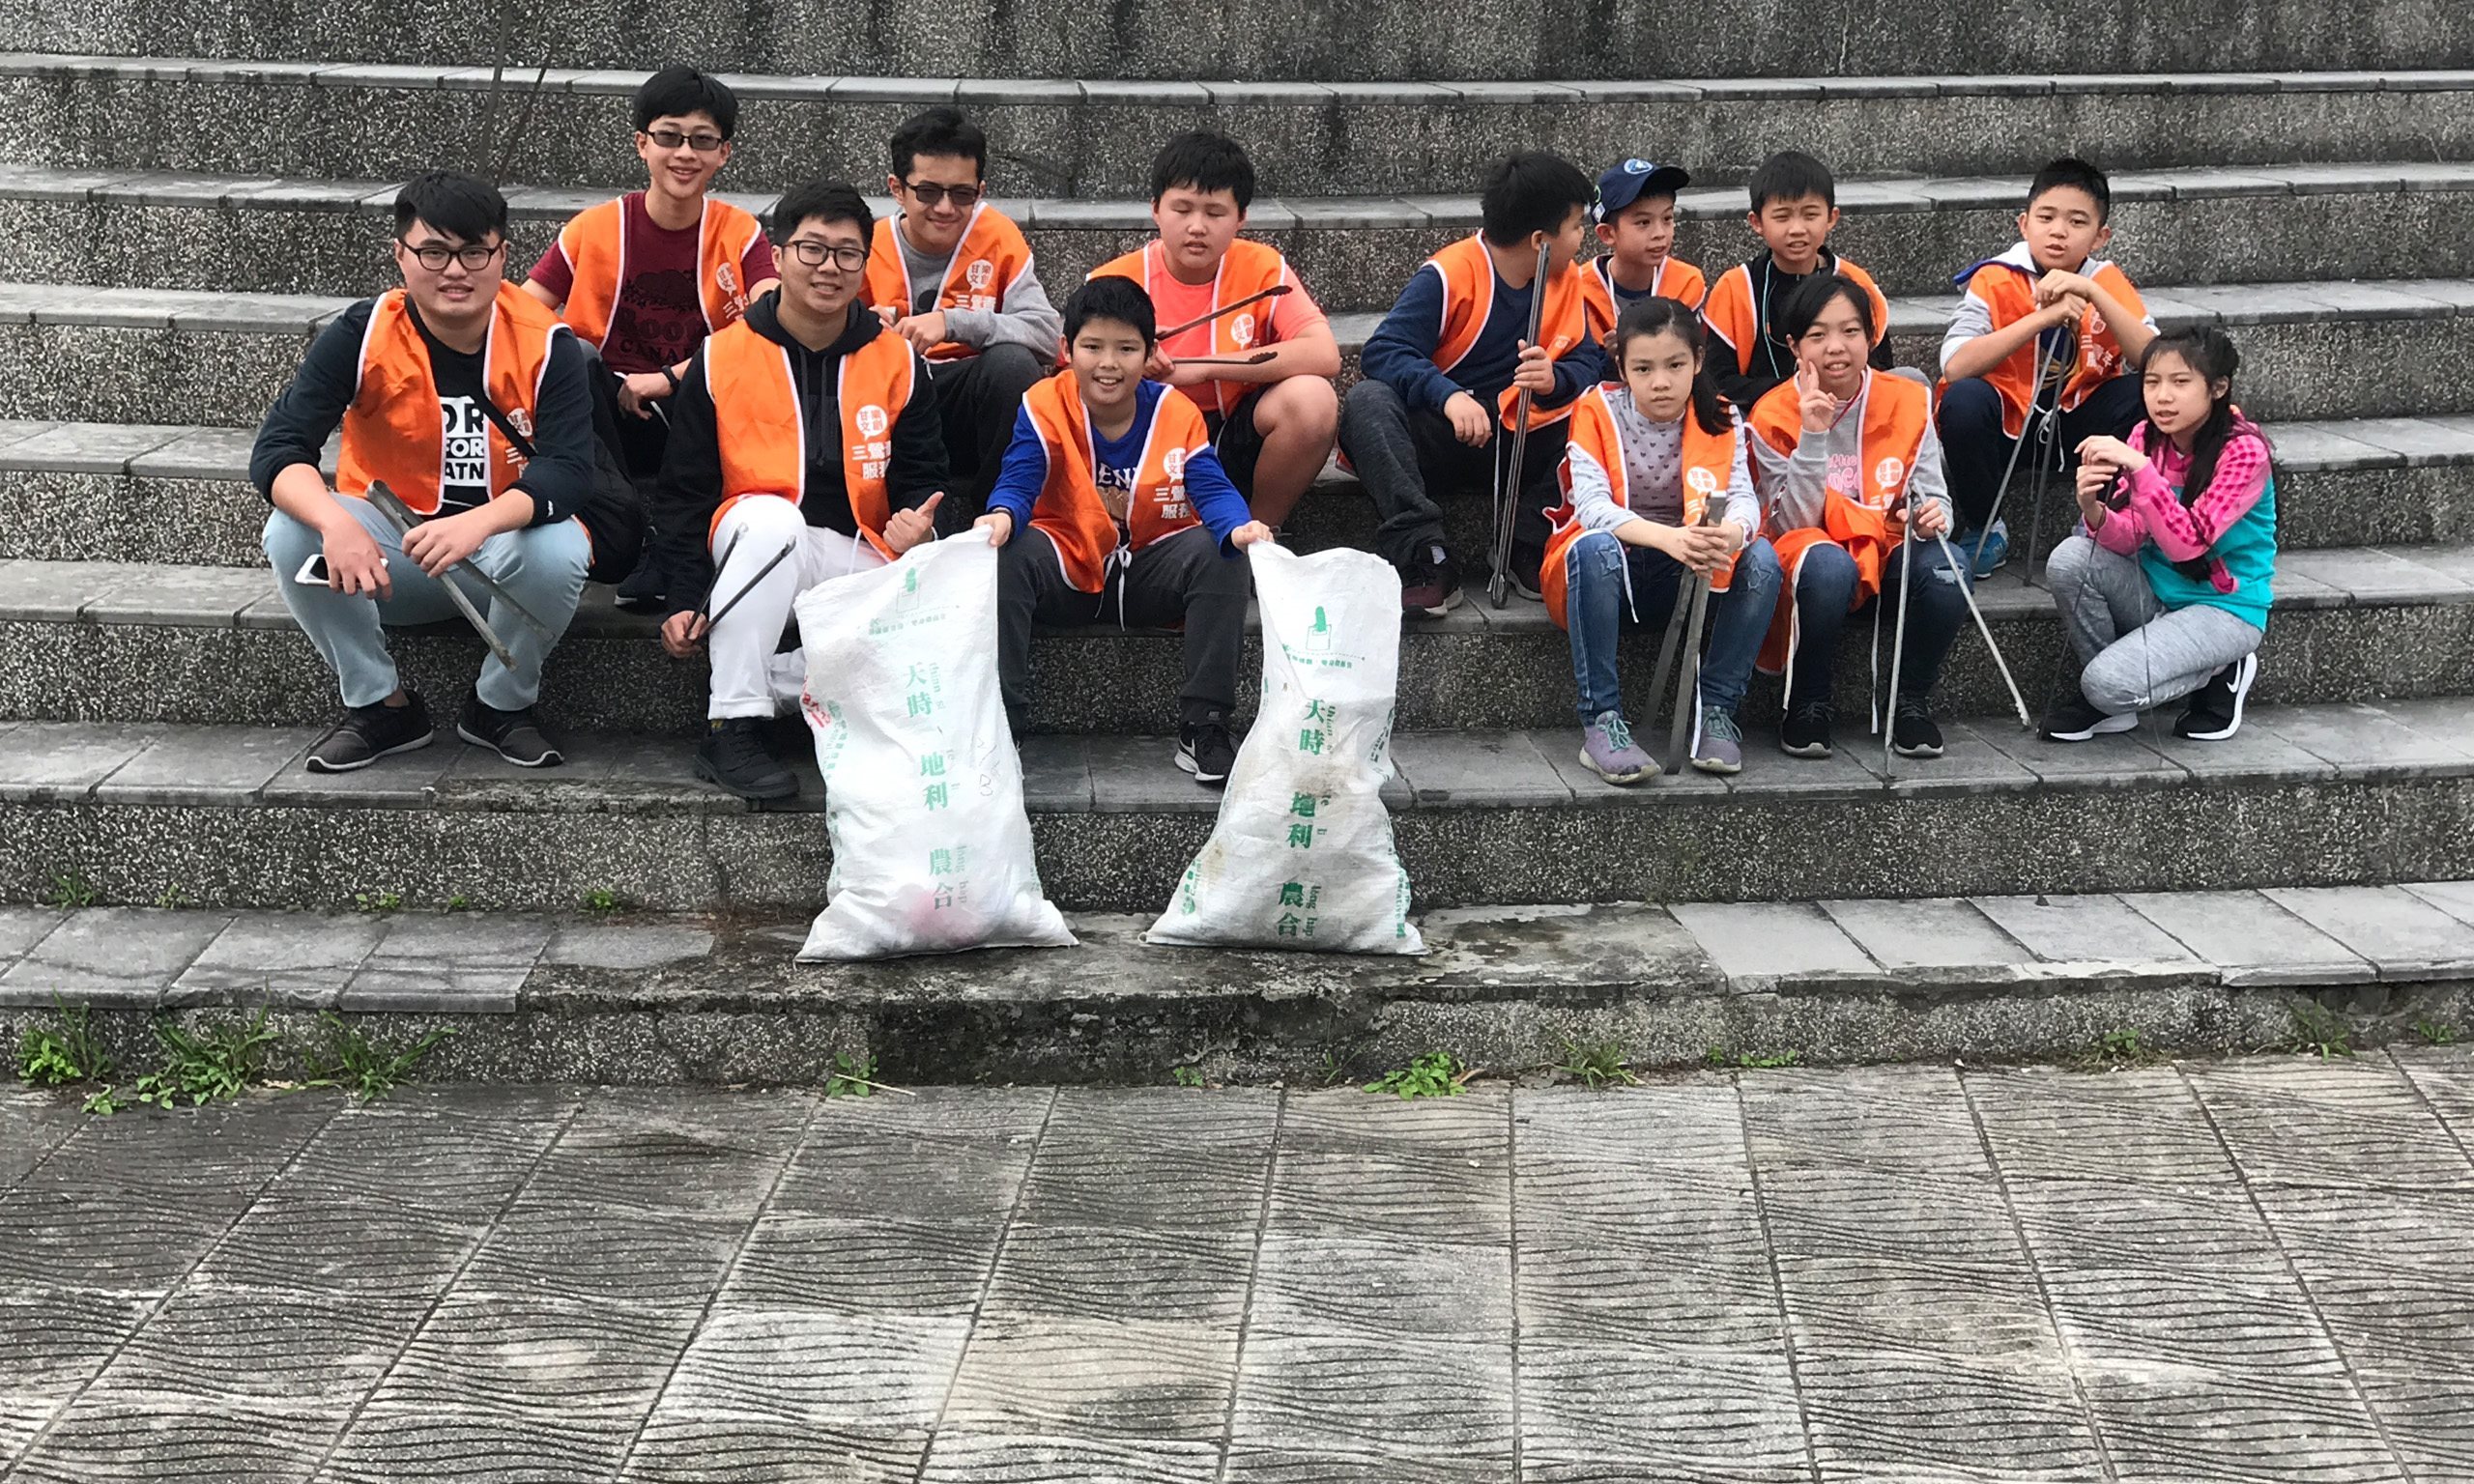 2019/01/19 River Clean-up Operation in Taiwan, Taipei Sanxia